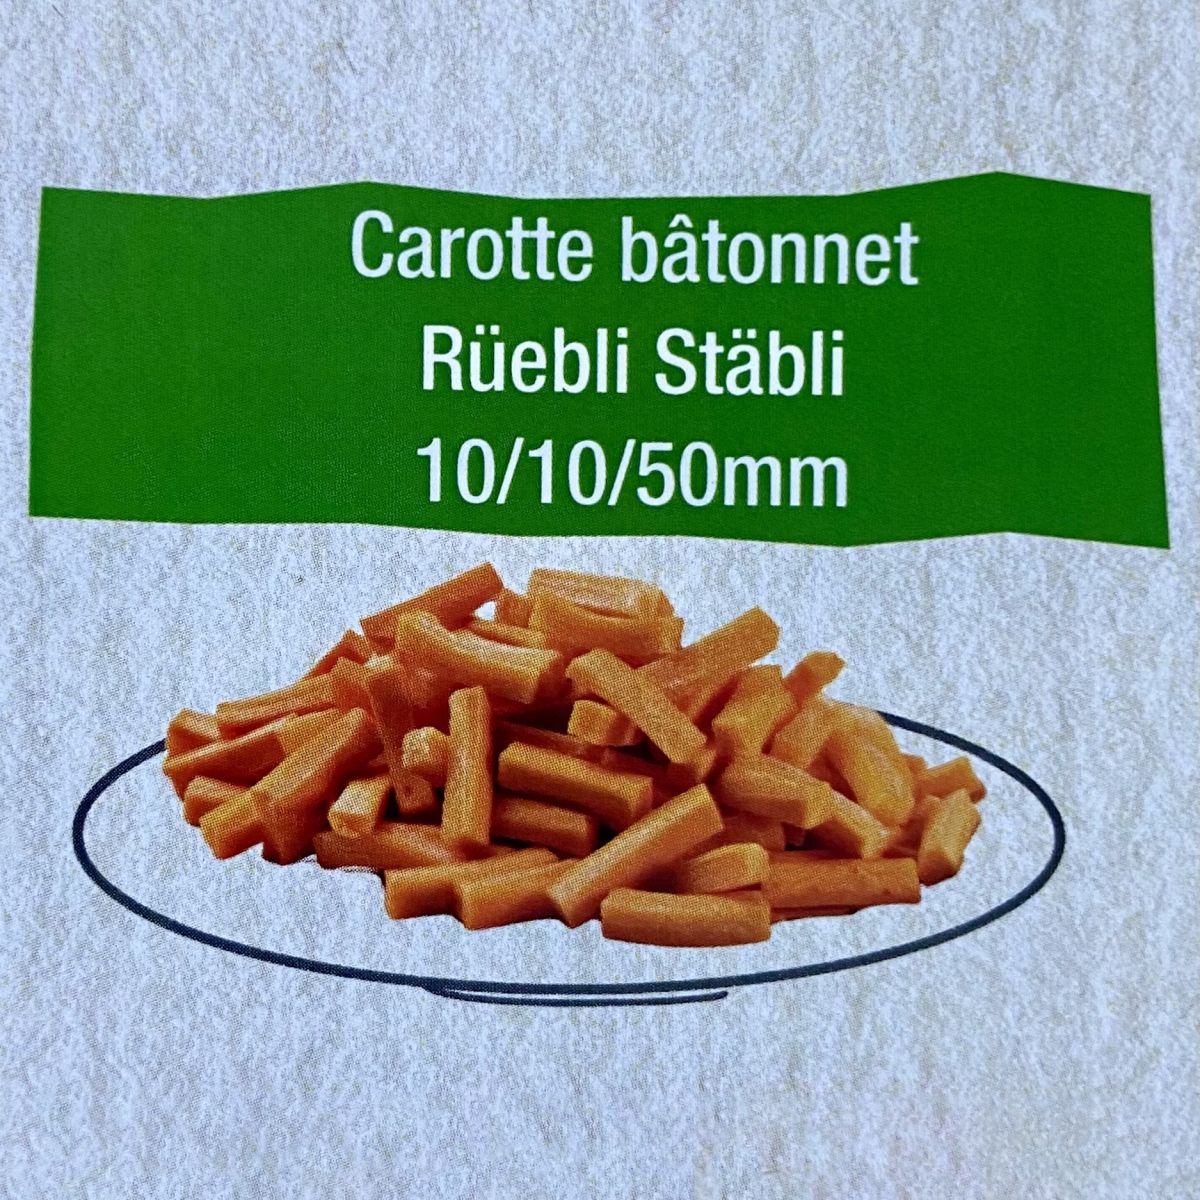 Carotte Bâtonnet 10/10/50 5 kg